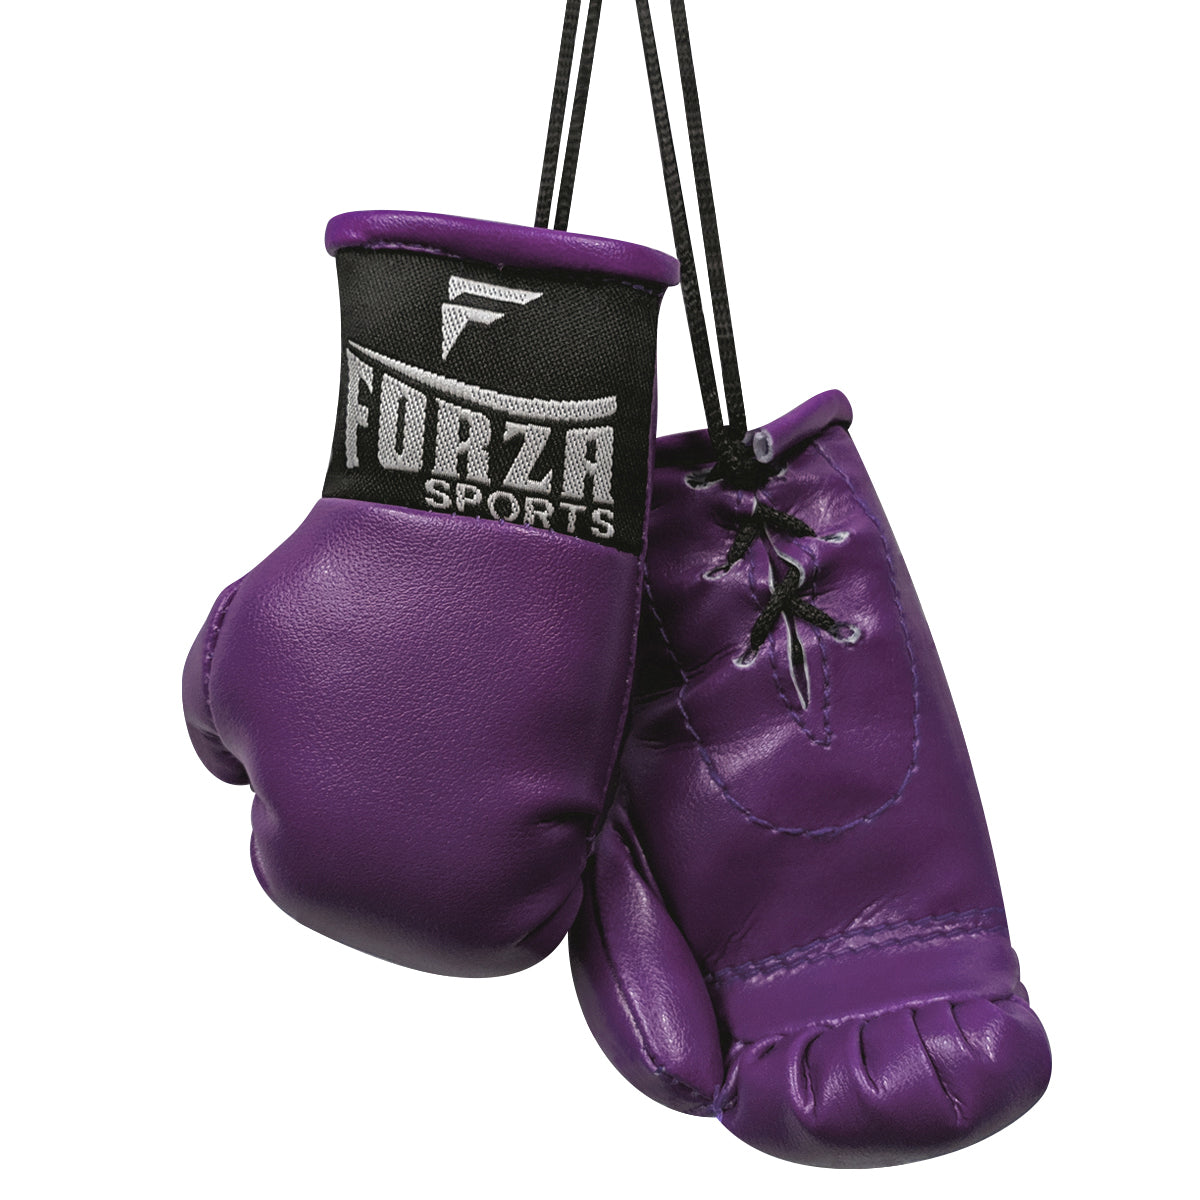 Forza Sports Mini Boxing Gloves - Purple Forza Sports